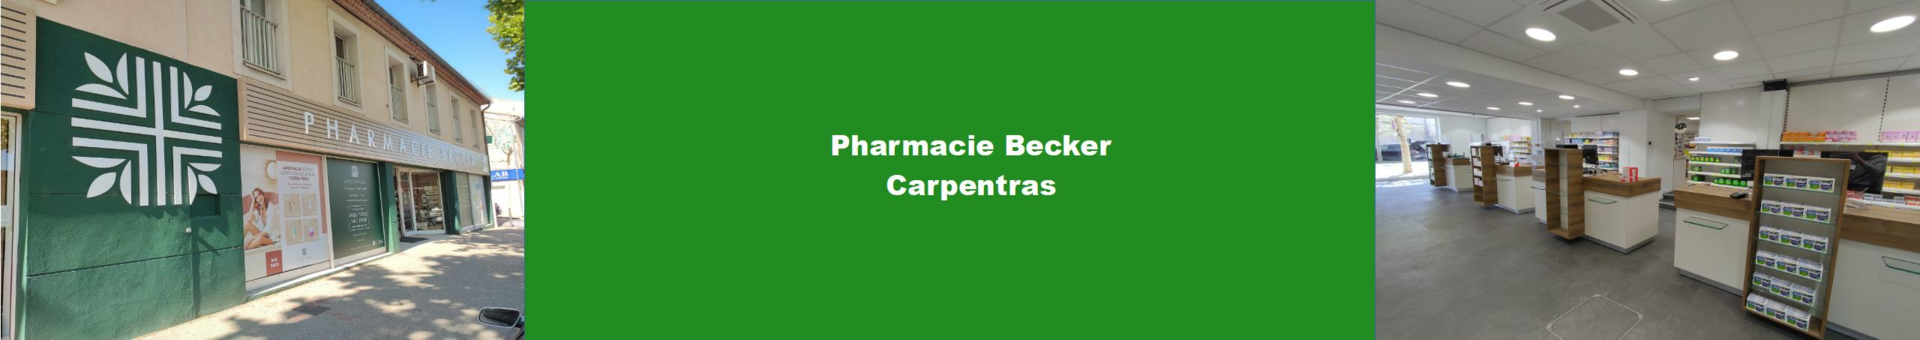 Pharmacie Becker Carpentras - Parapharmacie Wesail Autotest Covid-19 B/1 -  CARPENTRAS